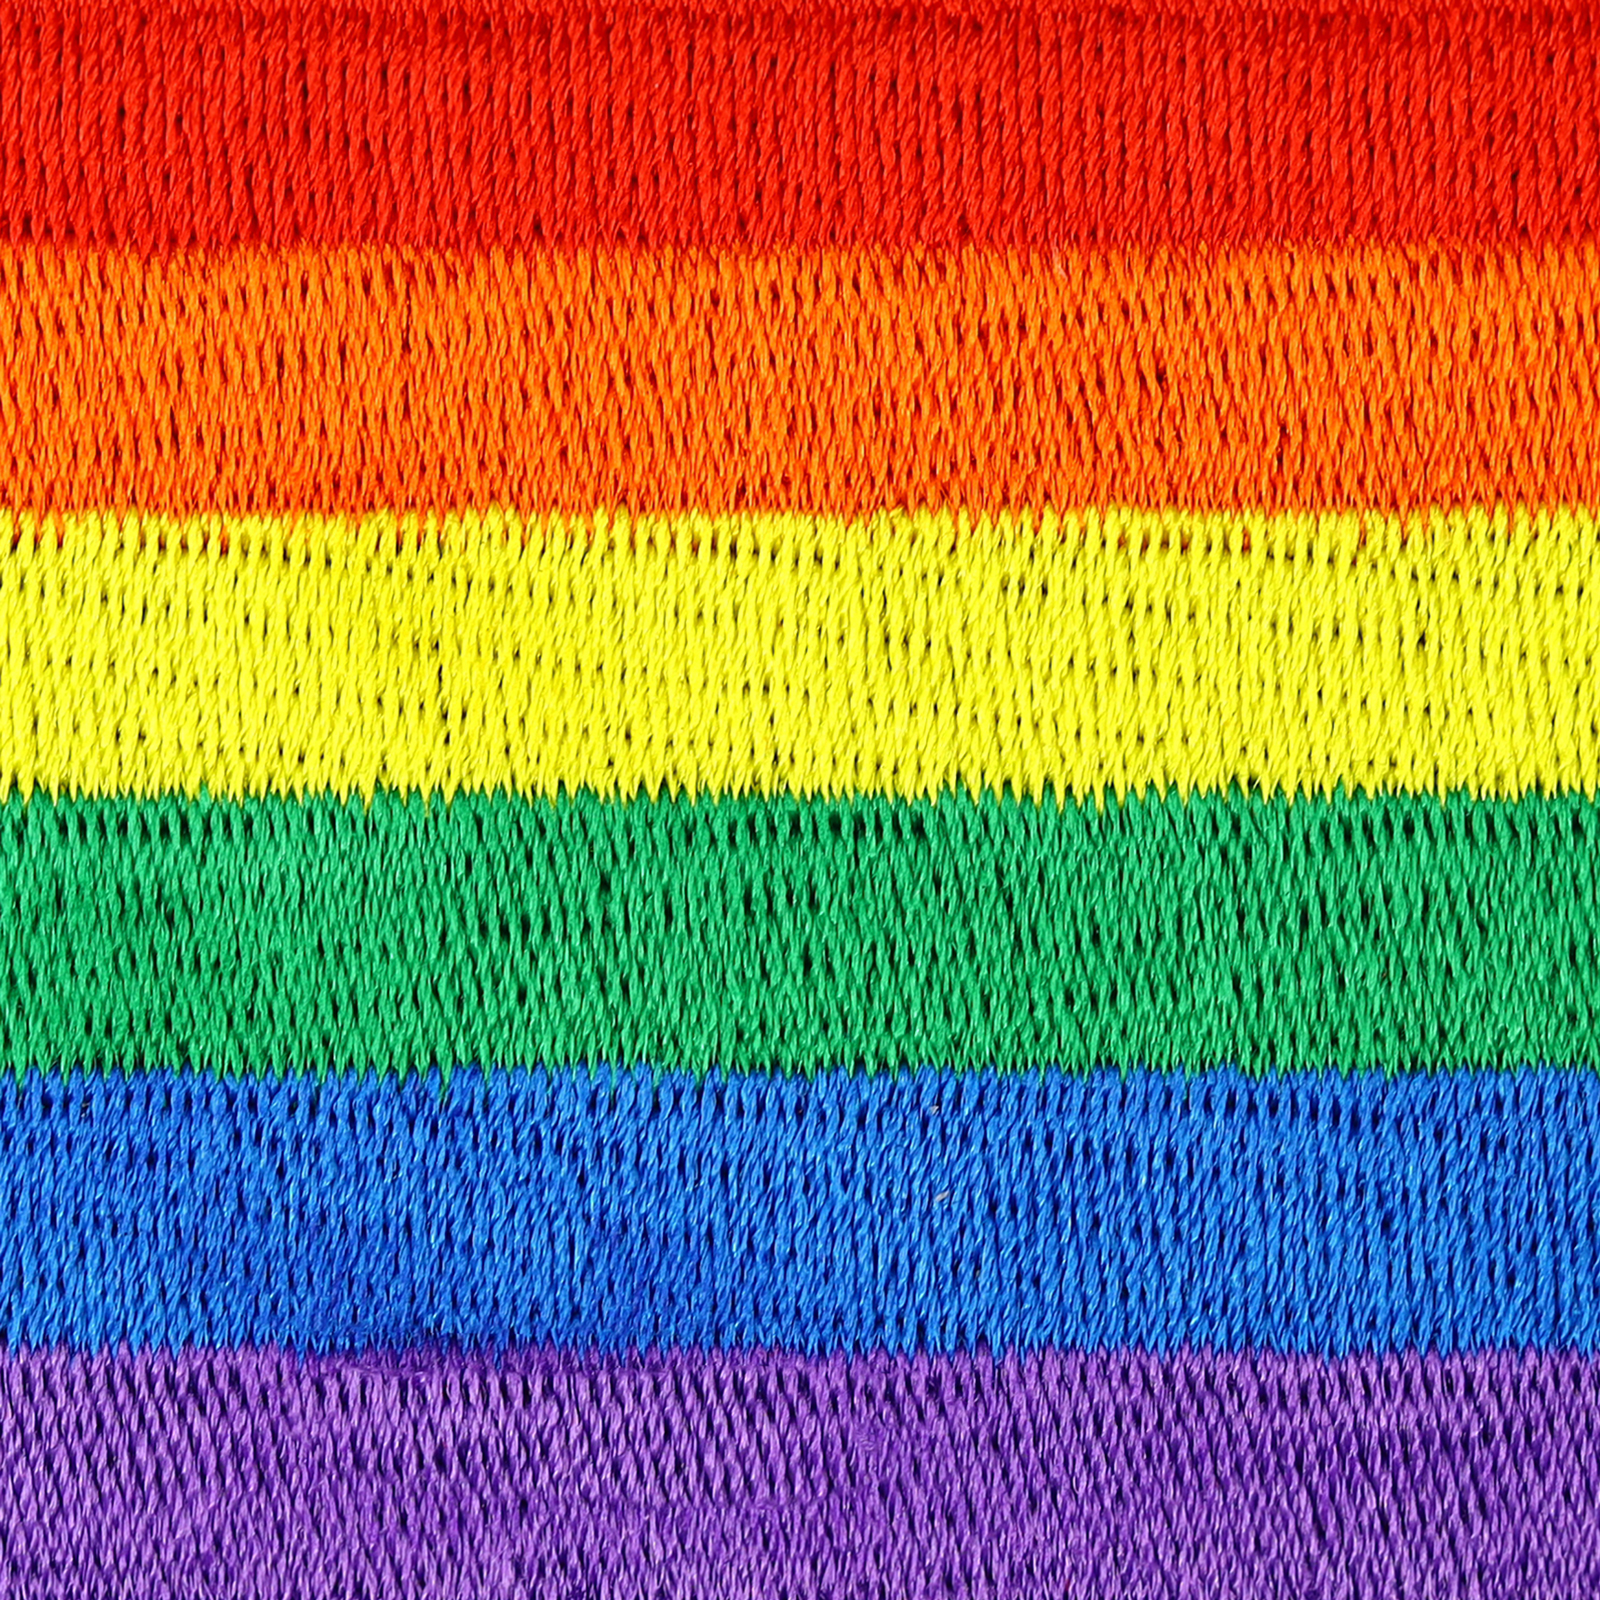 LGBTQ Flag - Patch